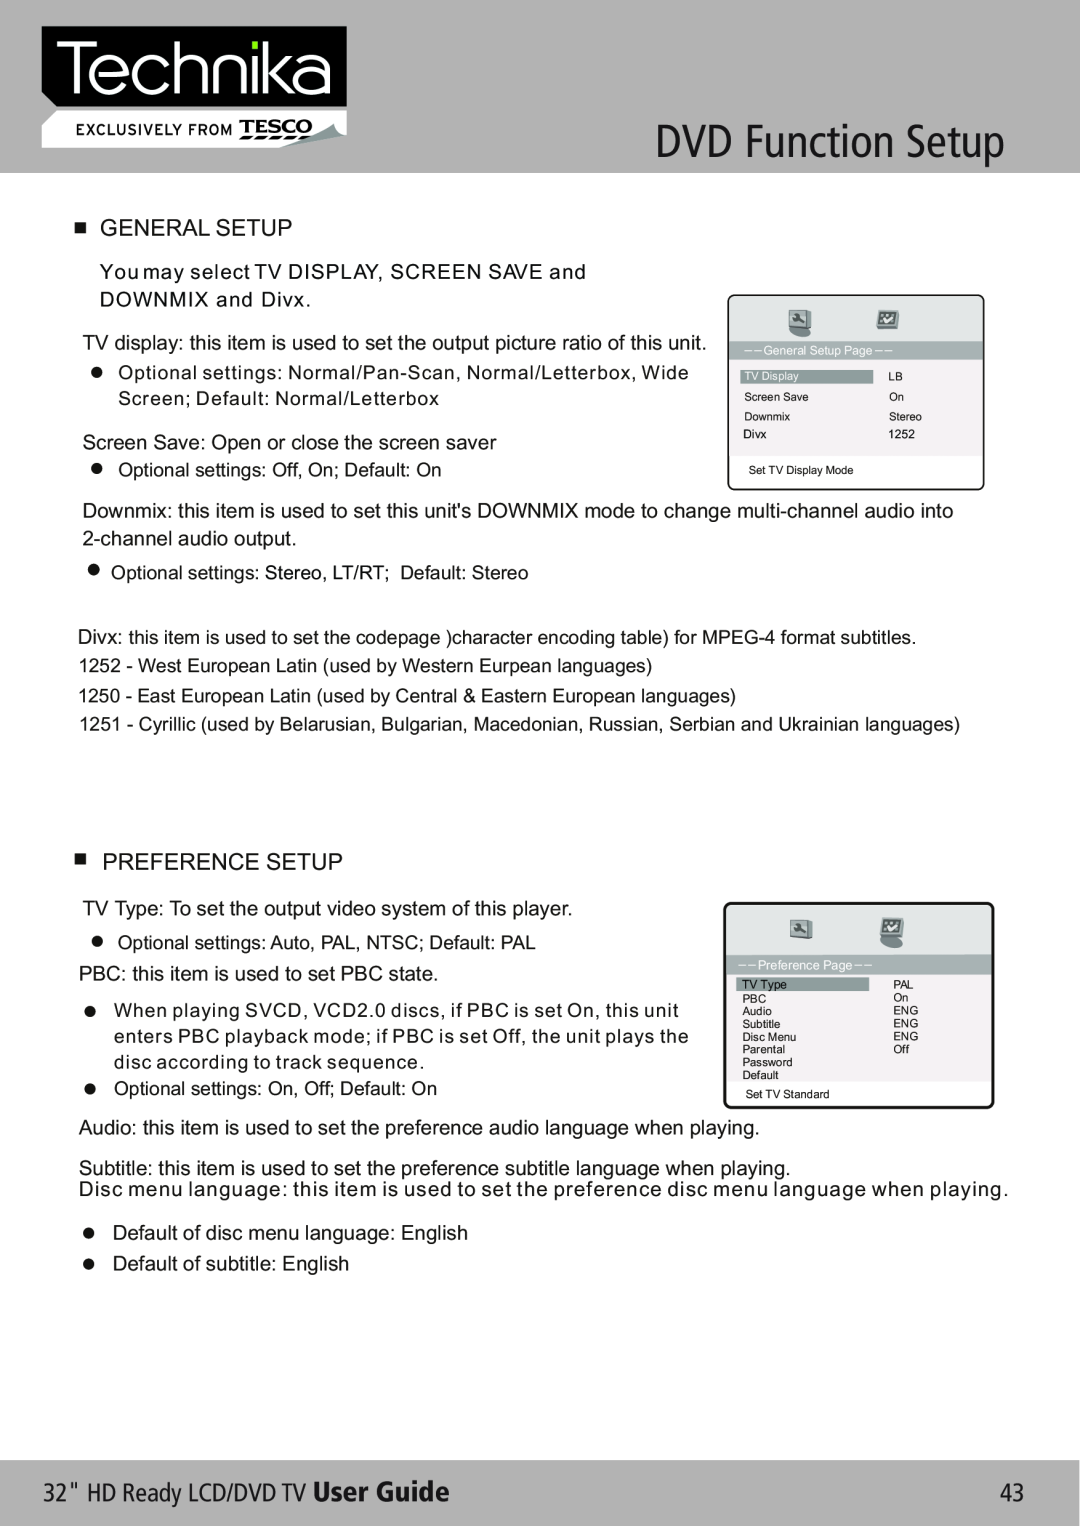 Technika 32-612 manual DVD Function Setup, HD Ready LCD/DVD TV User Guide, General Setup, Preference Setup 